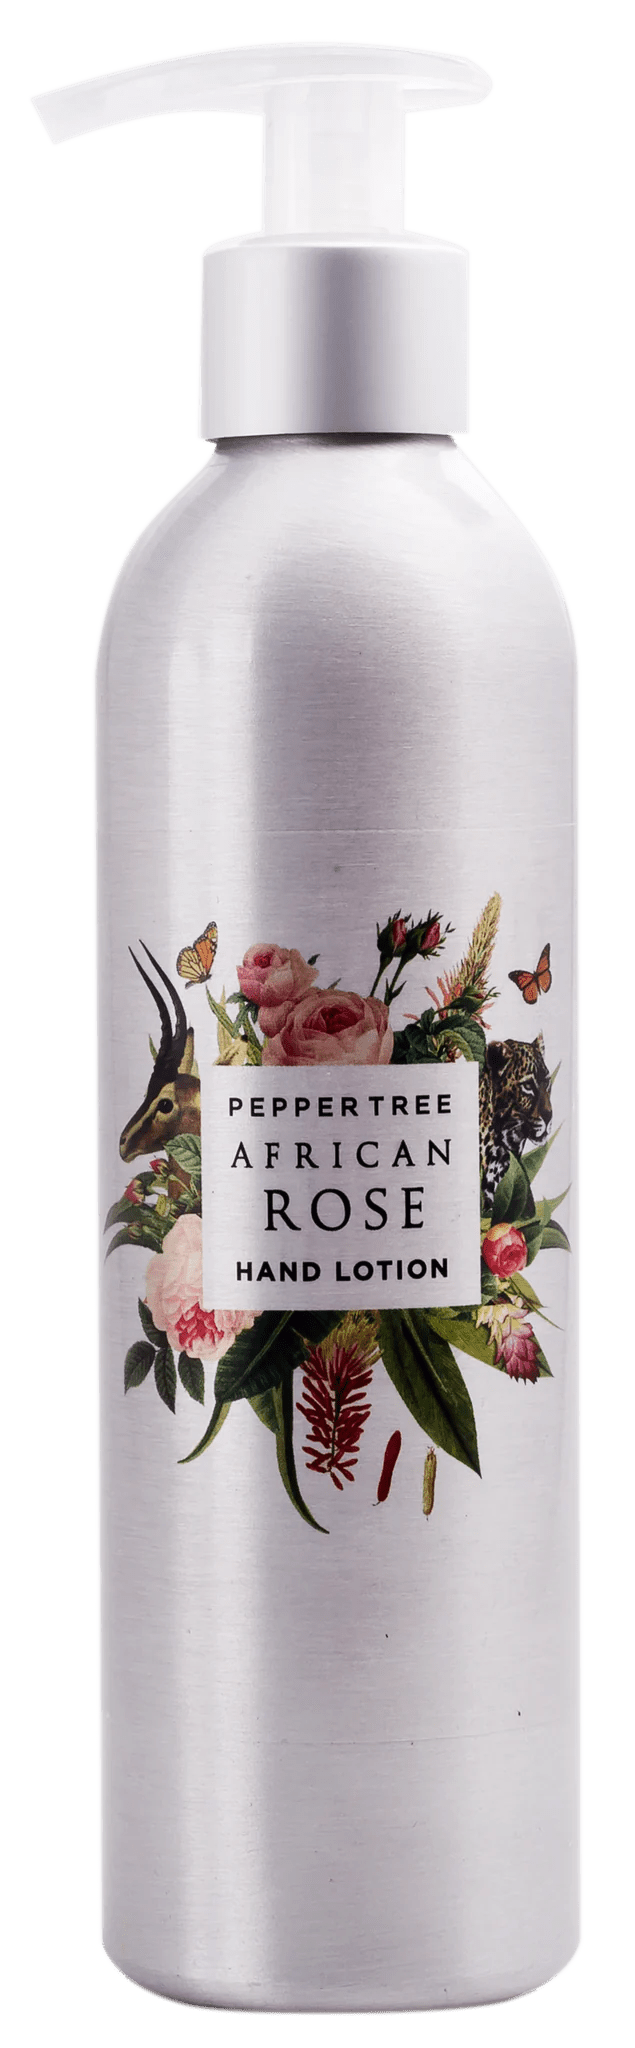 African Rose Hand Lotion 250 ml Regular price R 155.00 - Shopping4Africa